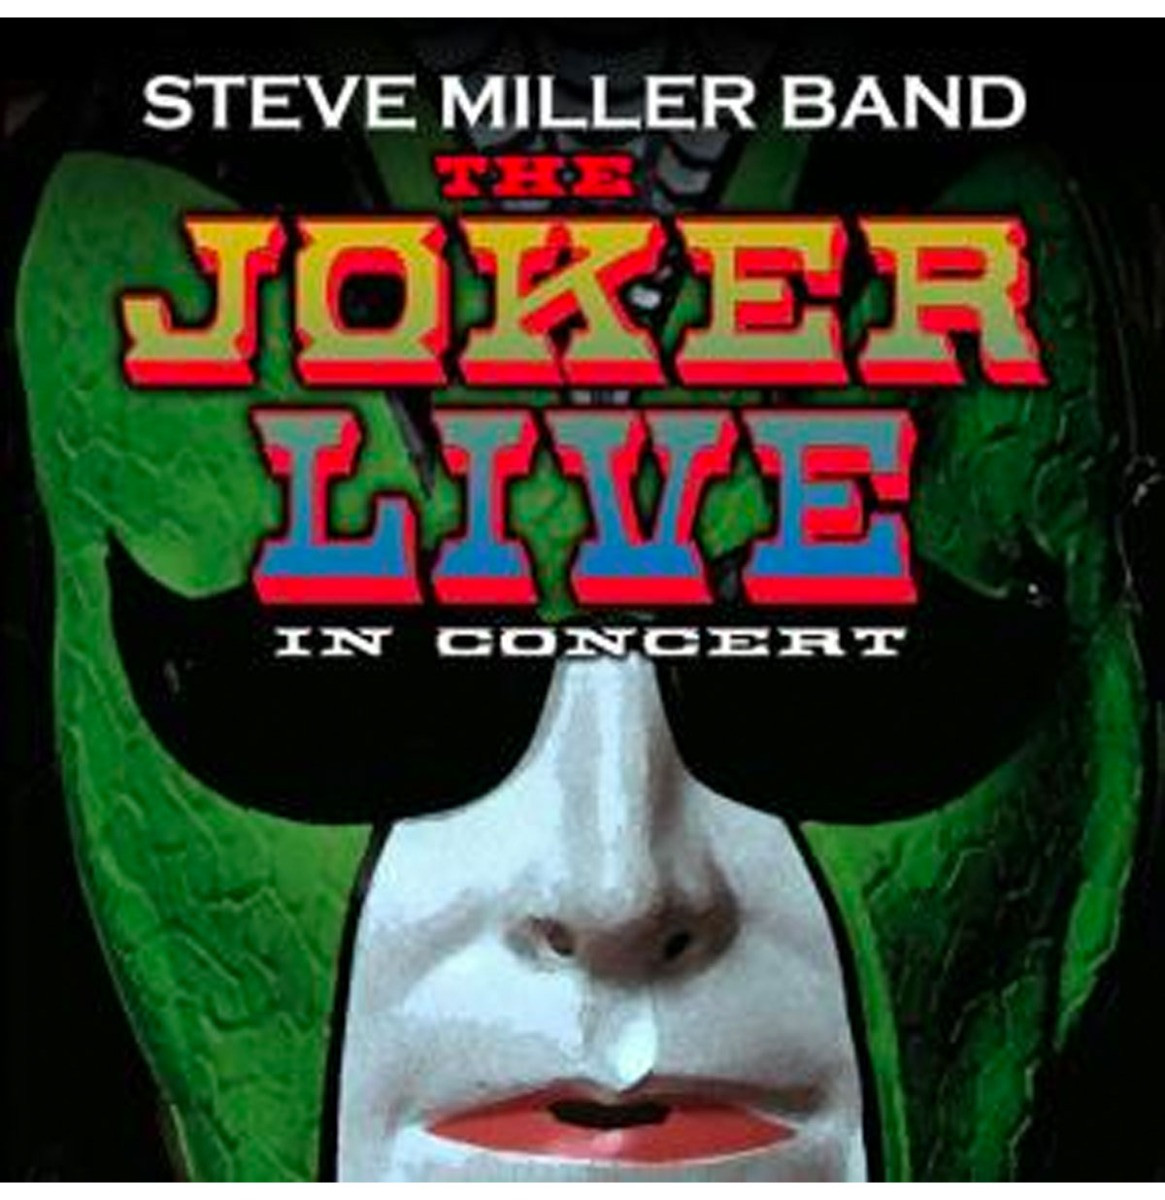 Steve Miller Band - Joker Live in Concert (Barnes & Noble Exclusive) LP